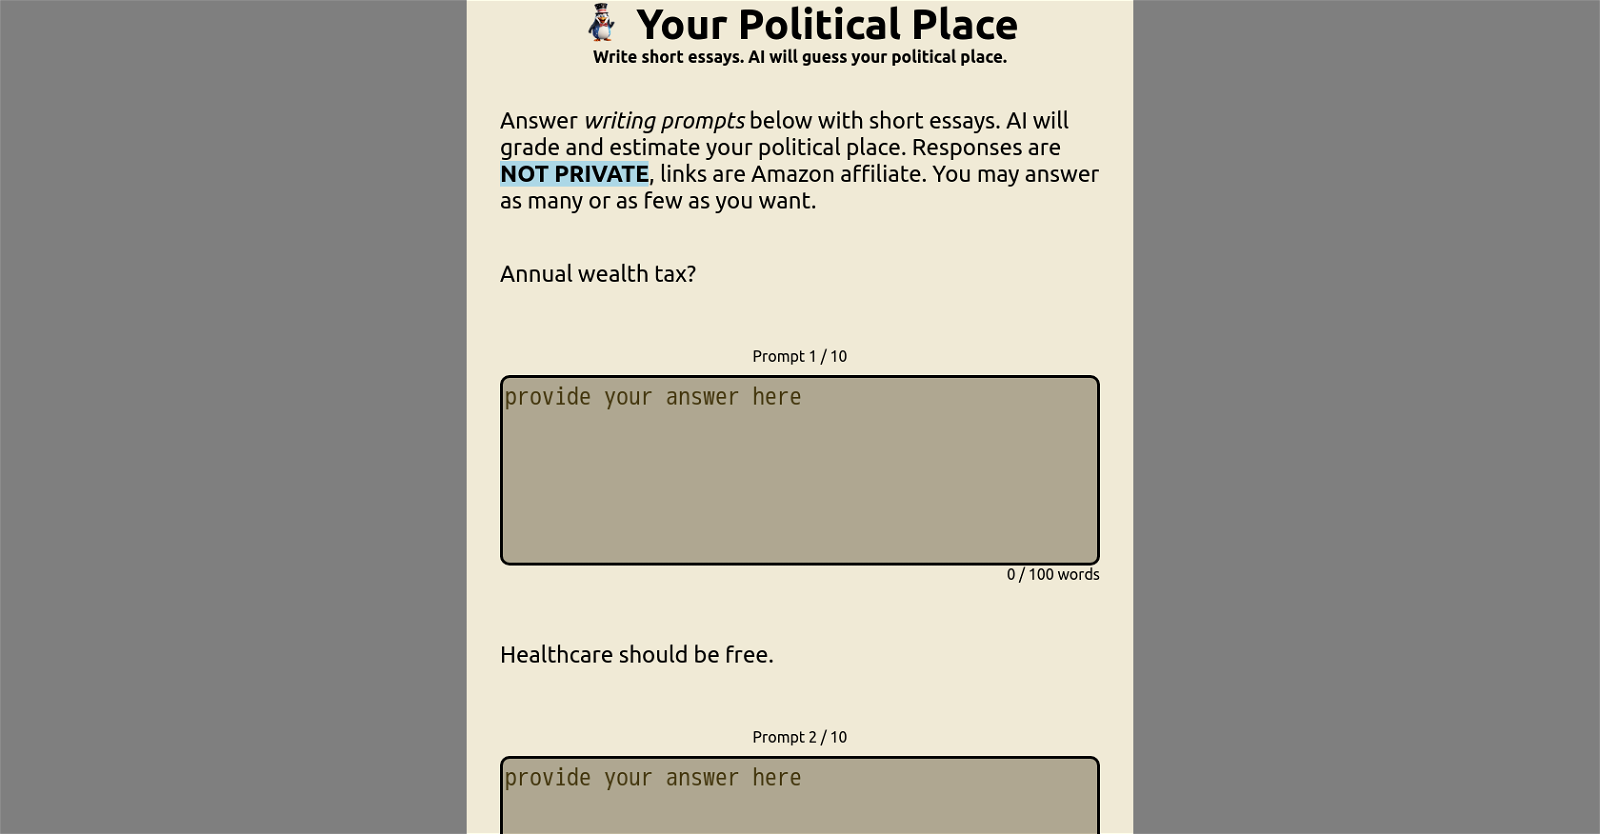 Your Political Place website